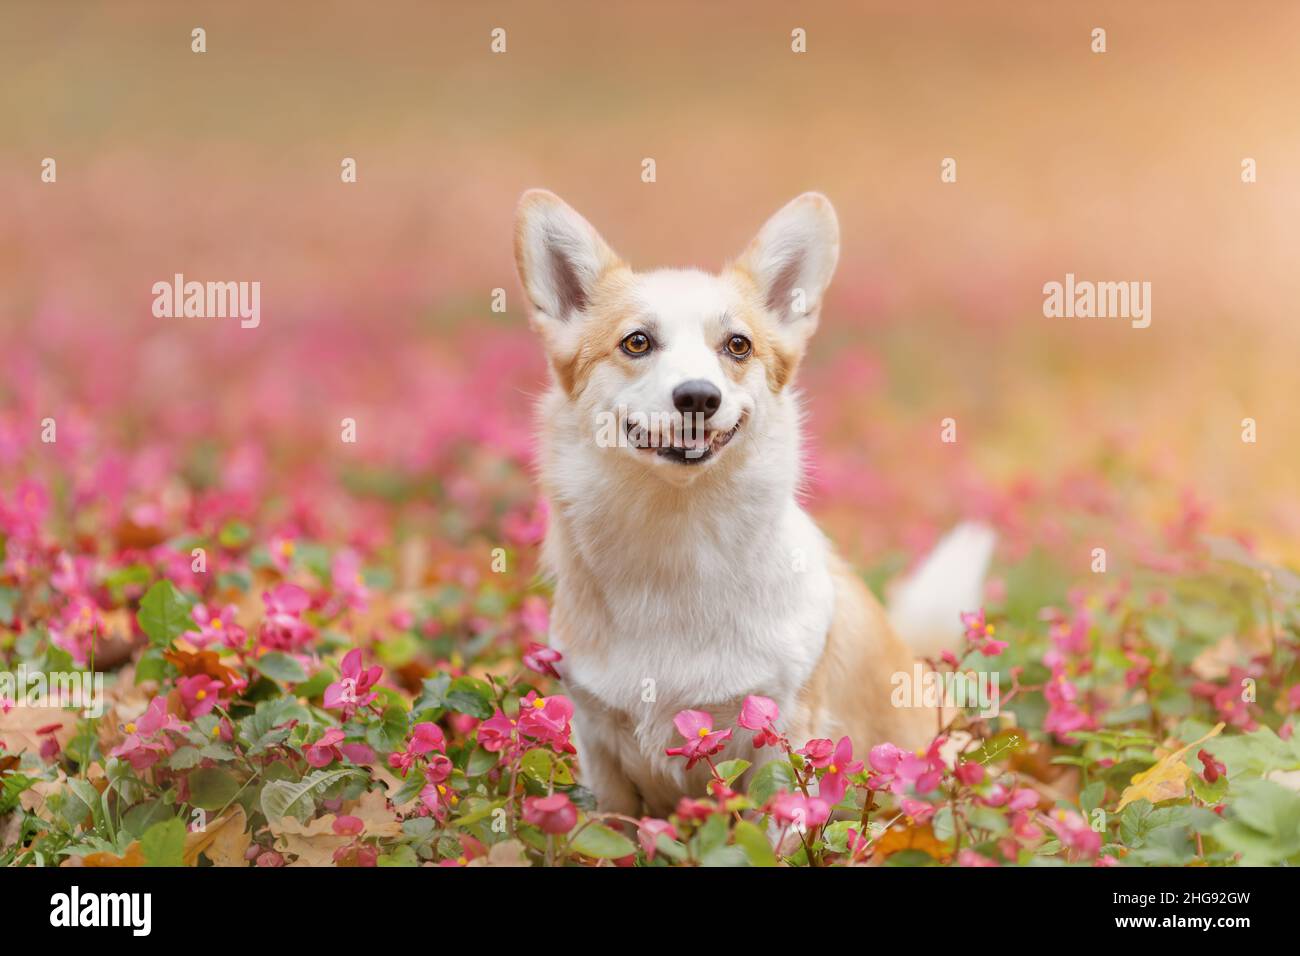 Potrait of happy smiling welsh corgi pembroke breed dog among soft tender pink flowers at nature Stock Photo